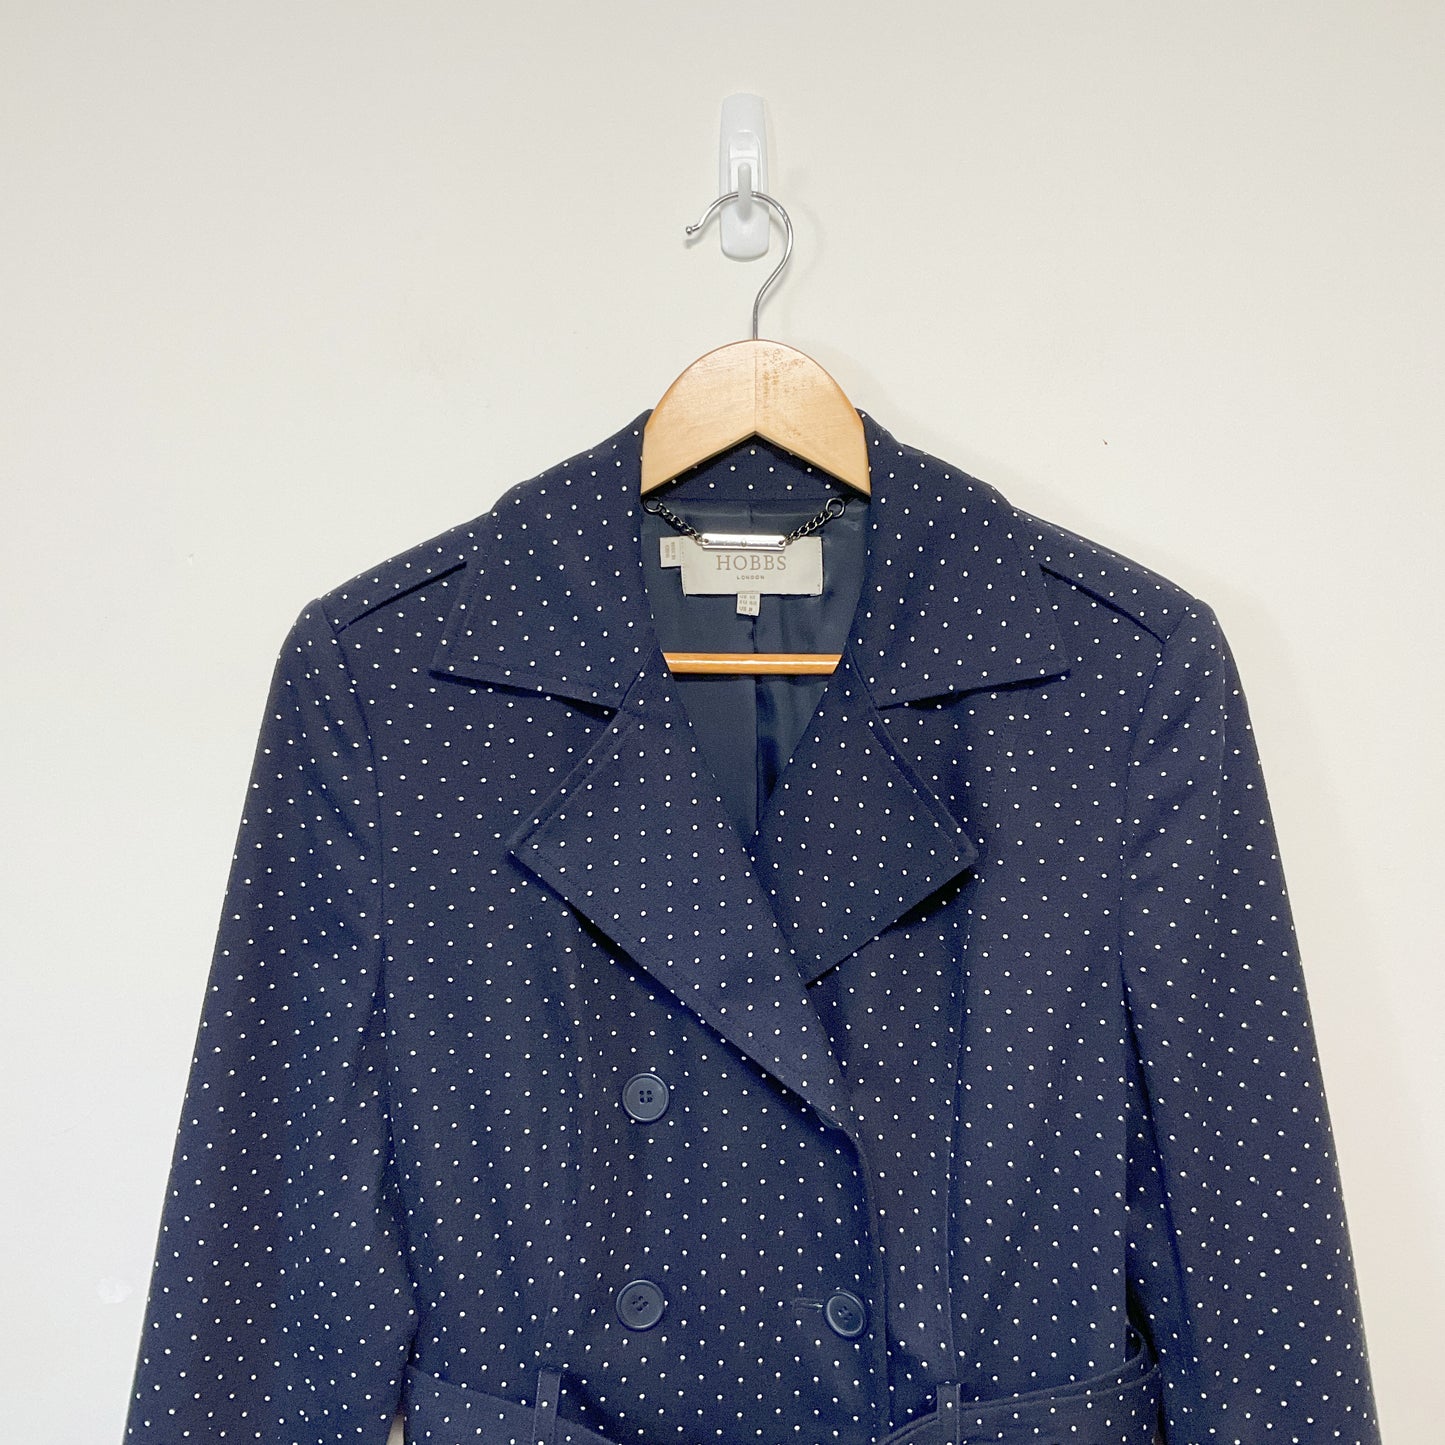 Hobbs London - Coat in Marine Blue